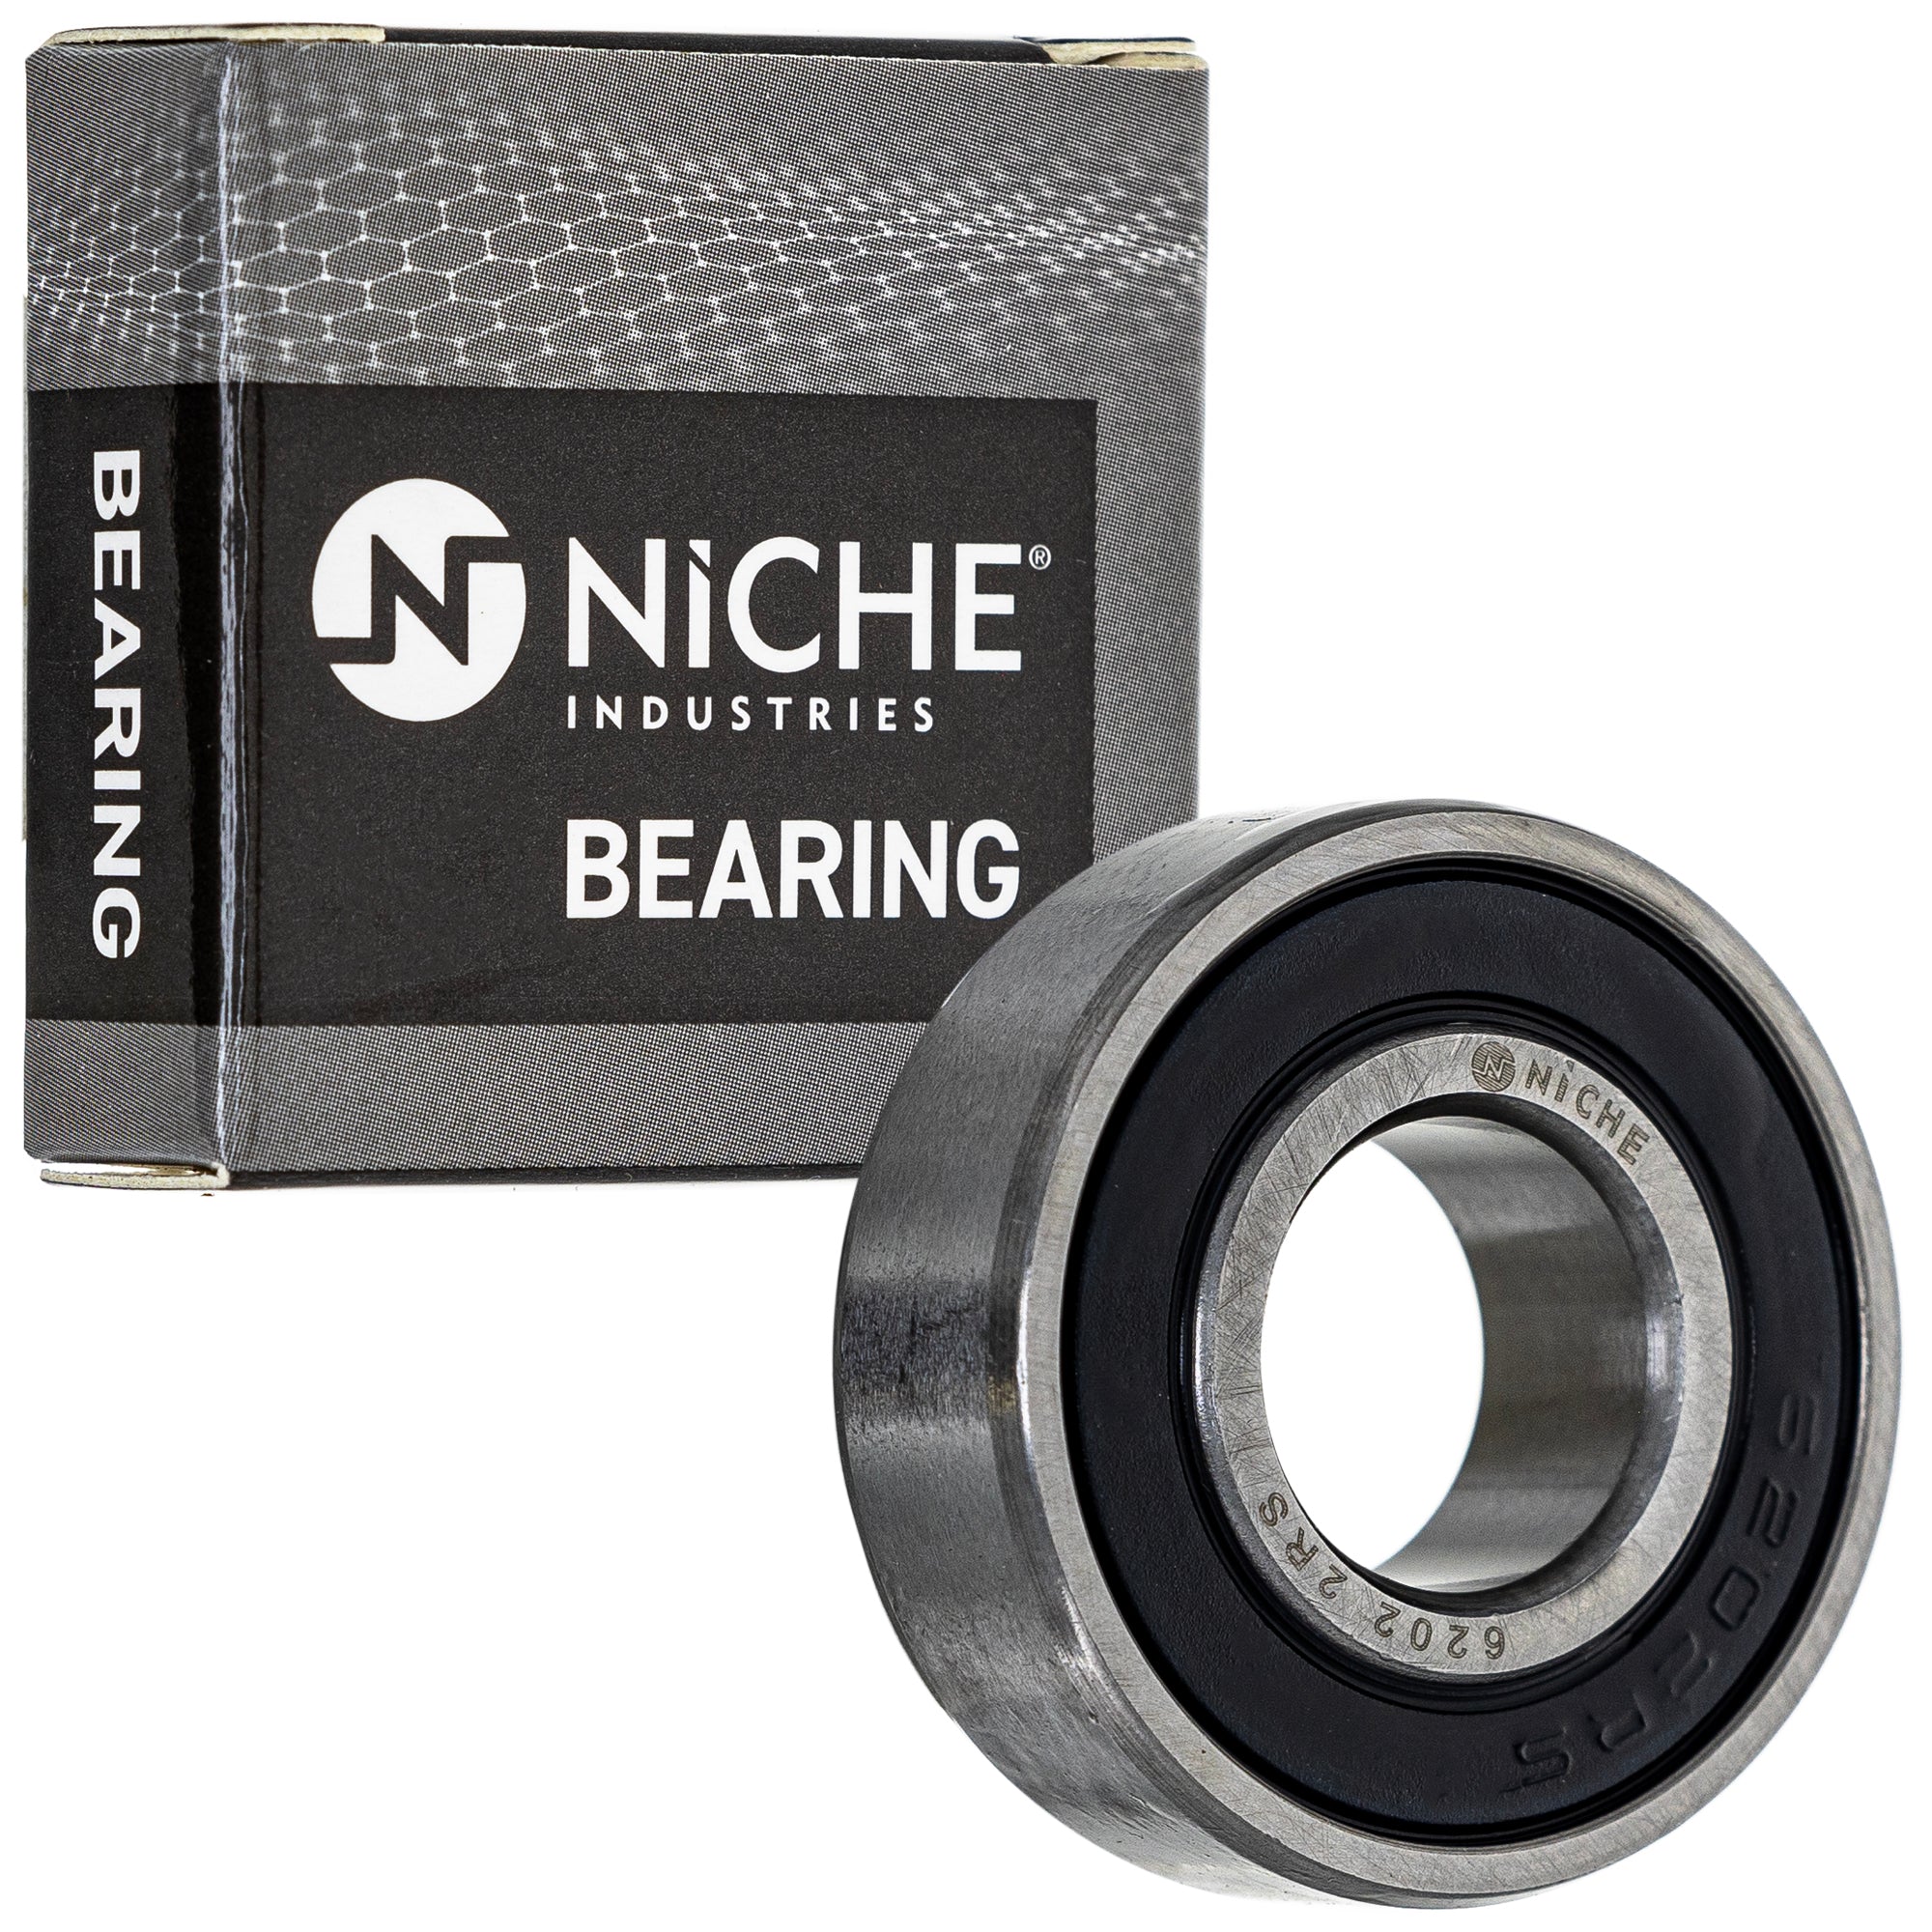 NICHE 519-CBB2227R Bearing & Seal Kit 2-Pack for zOTHER Polaris